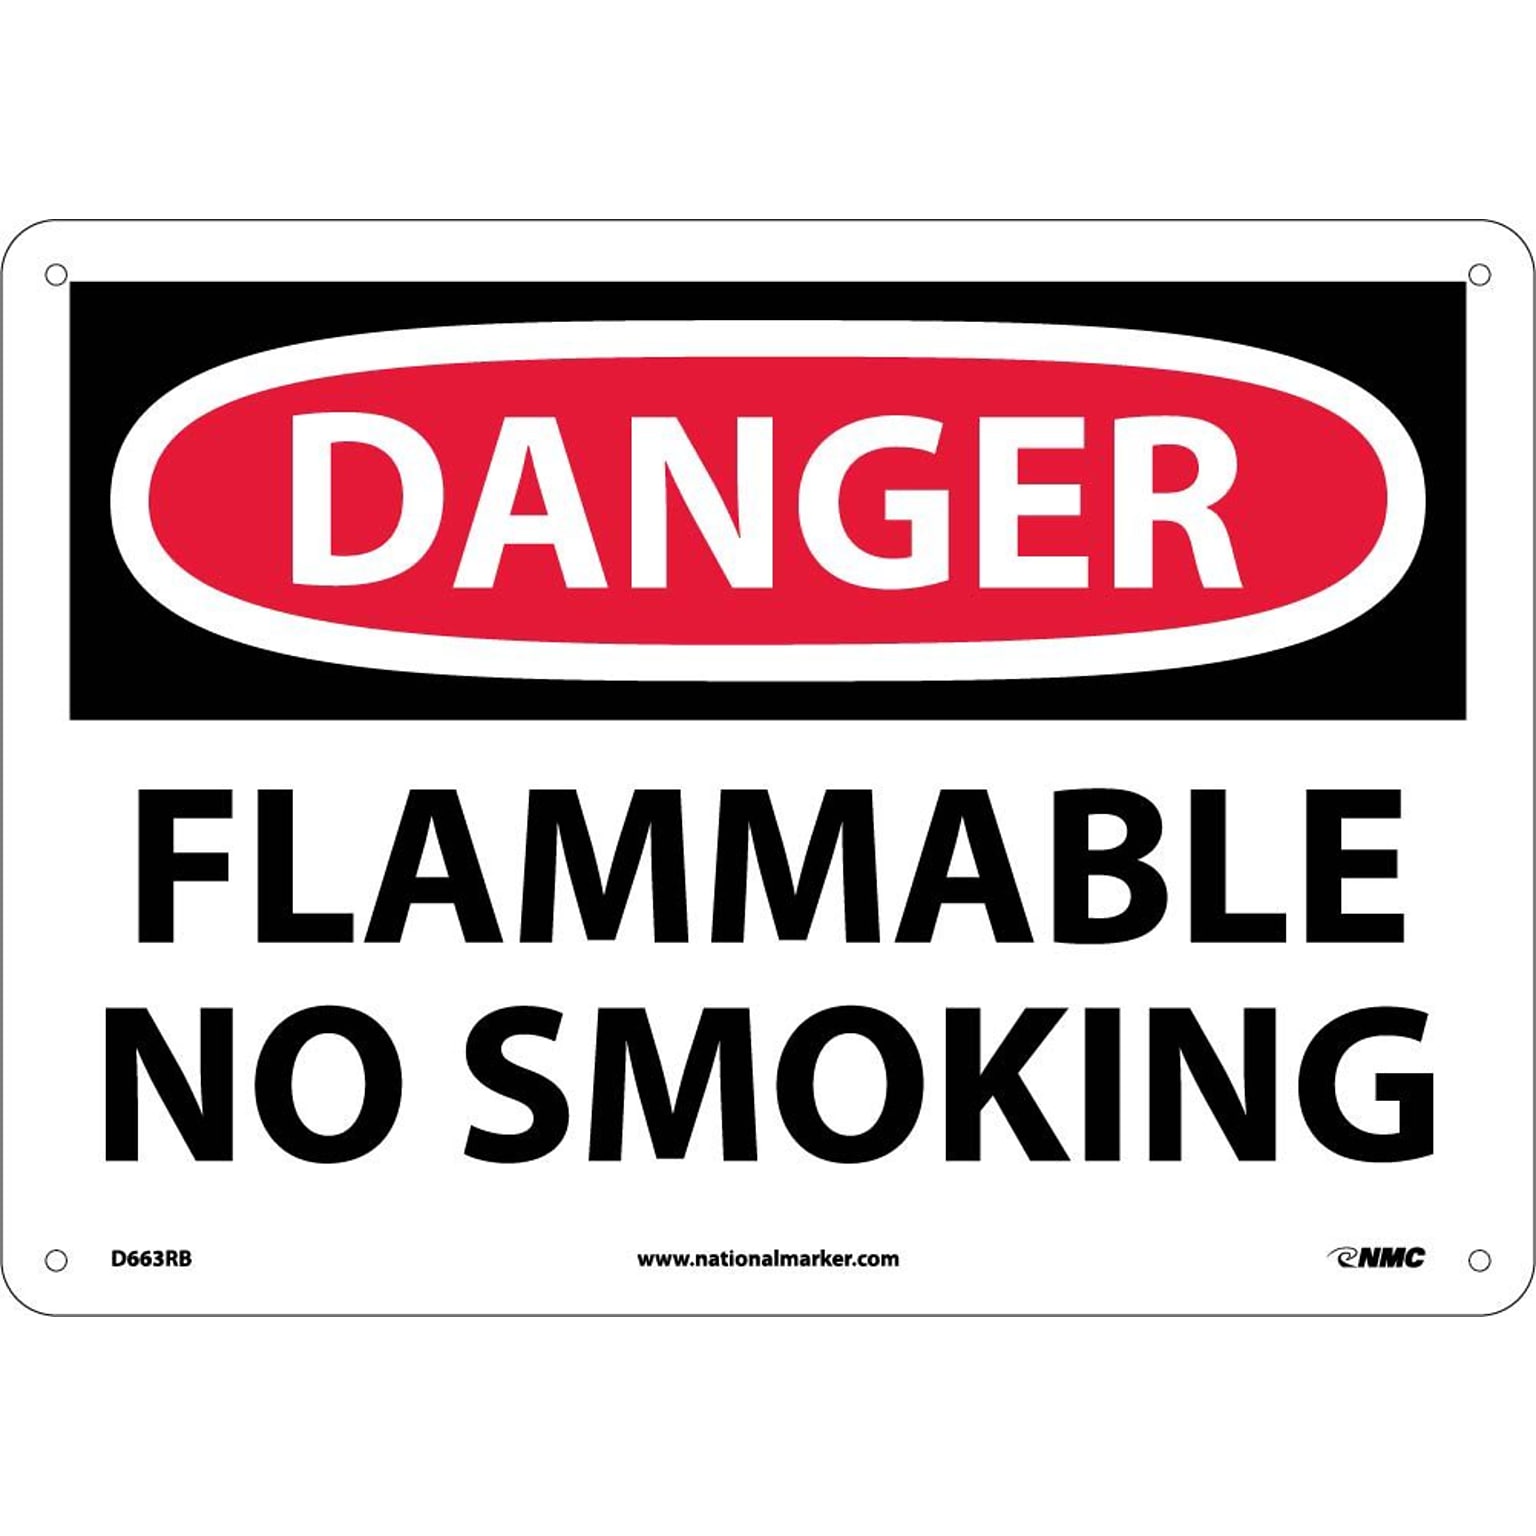 Flammable No Smoking, 10X14, Rigid Plastic, Danger Sign